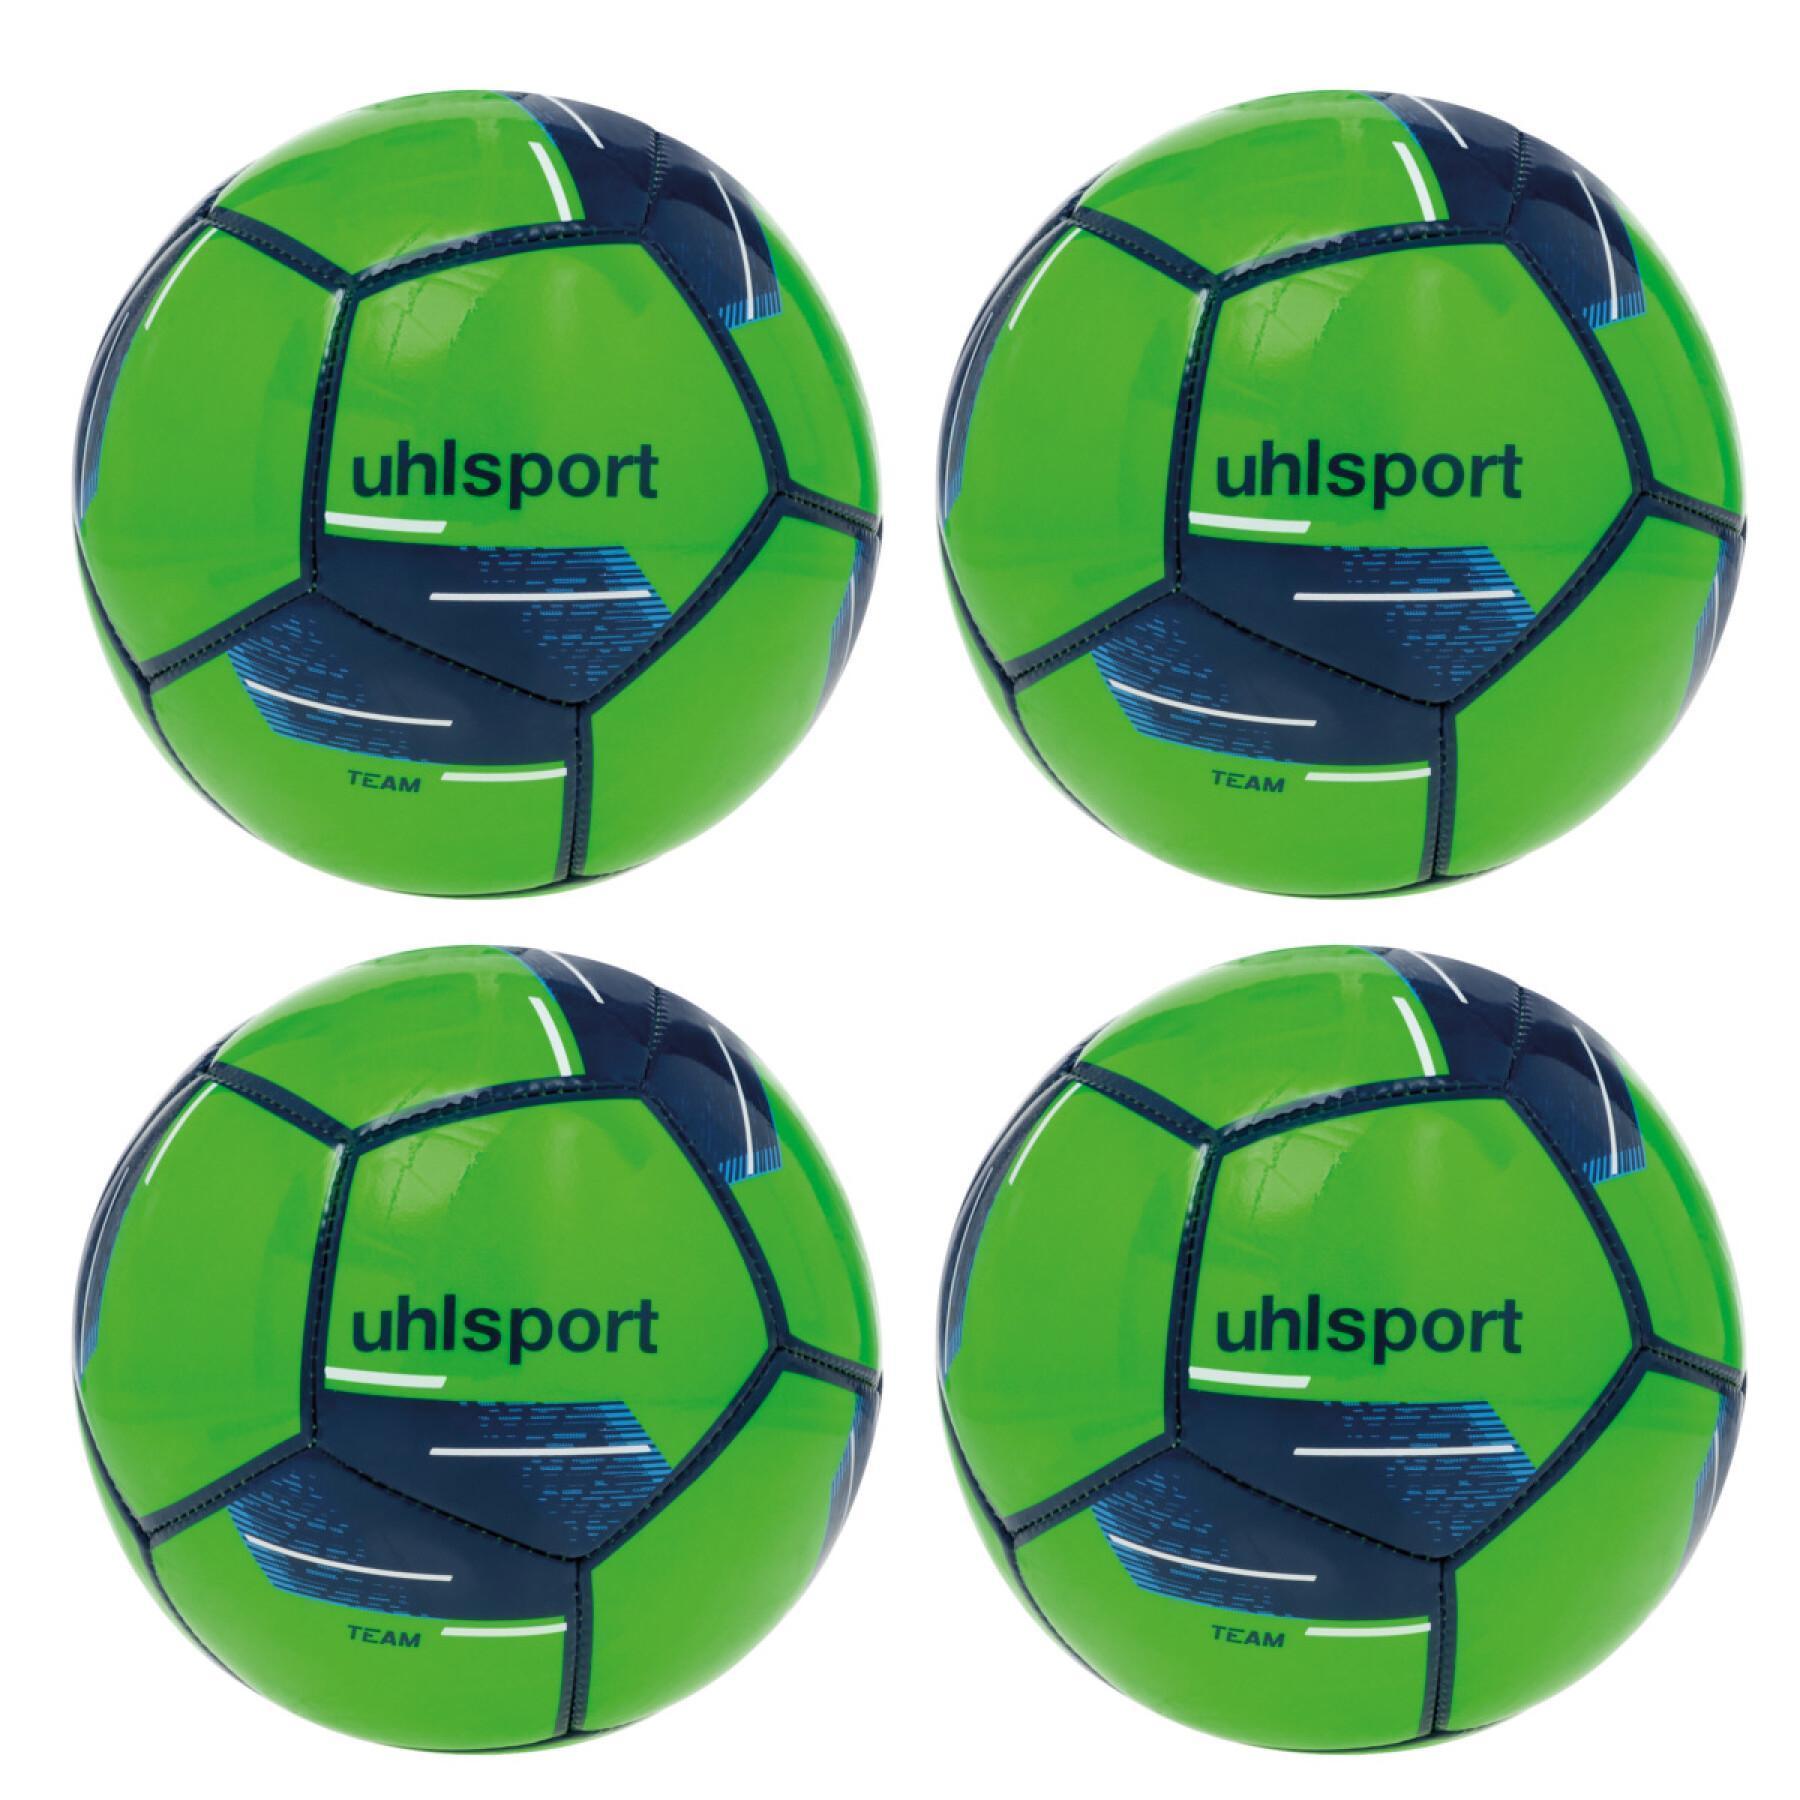 Set of 4 mini Soccer Balls - Mini Uhlsport 3 Footballs Uhlsport - Team Size 